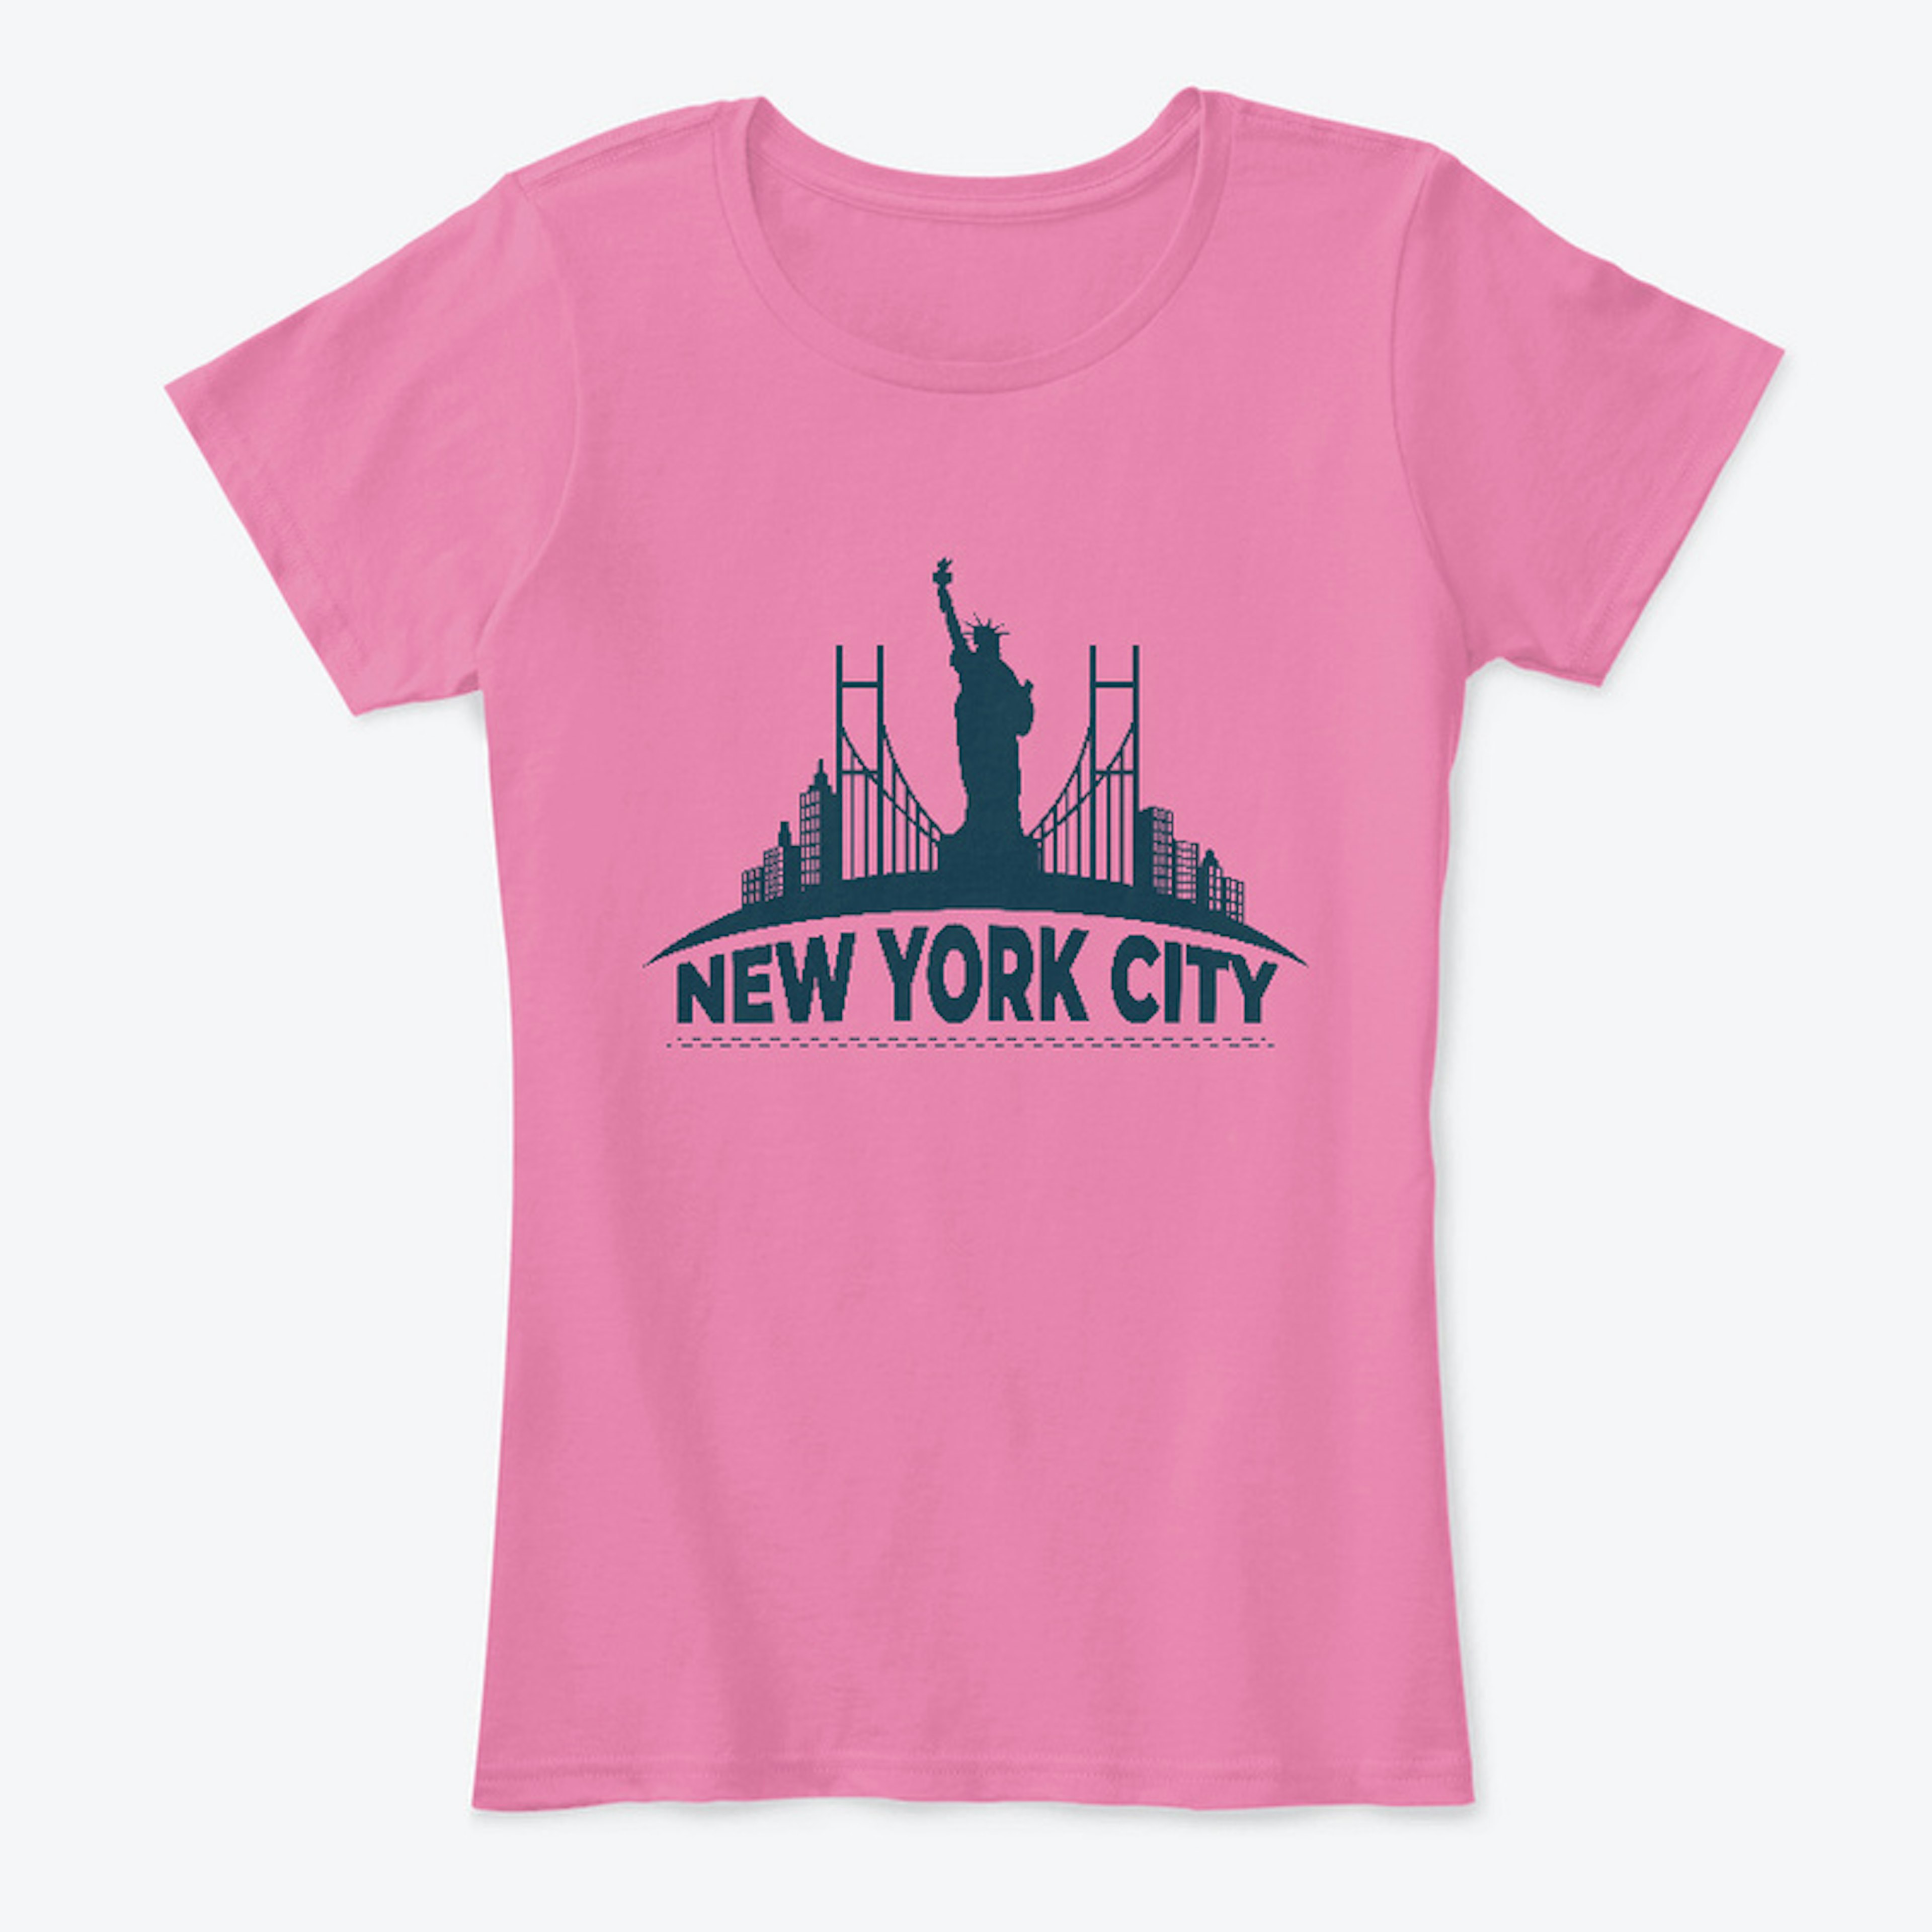 New York City women's tees